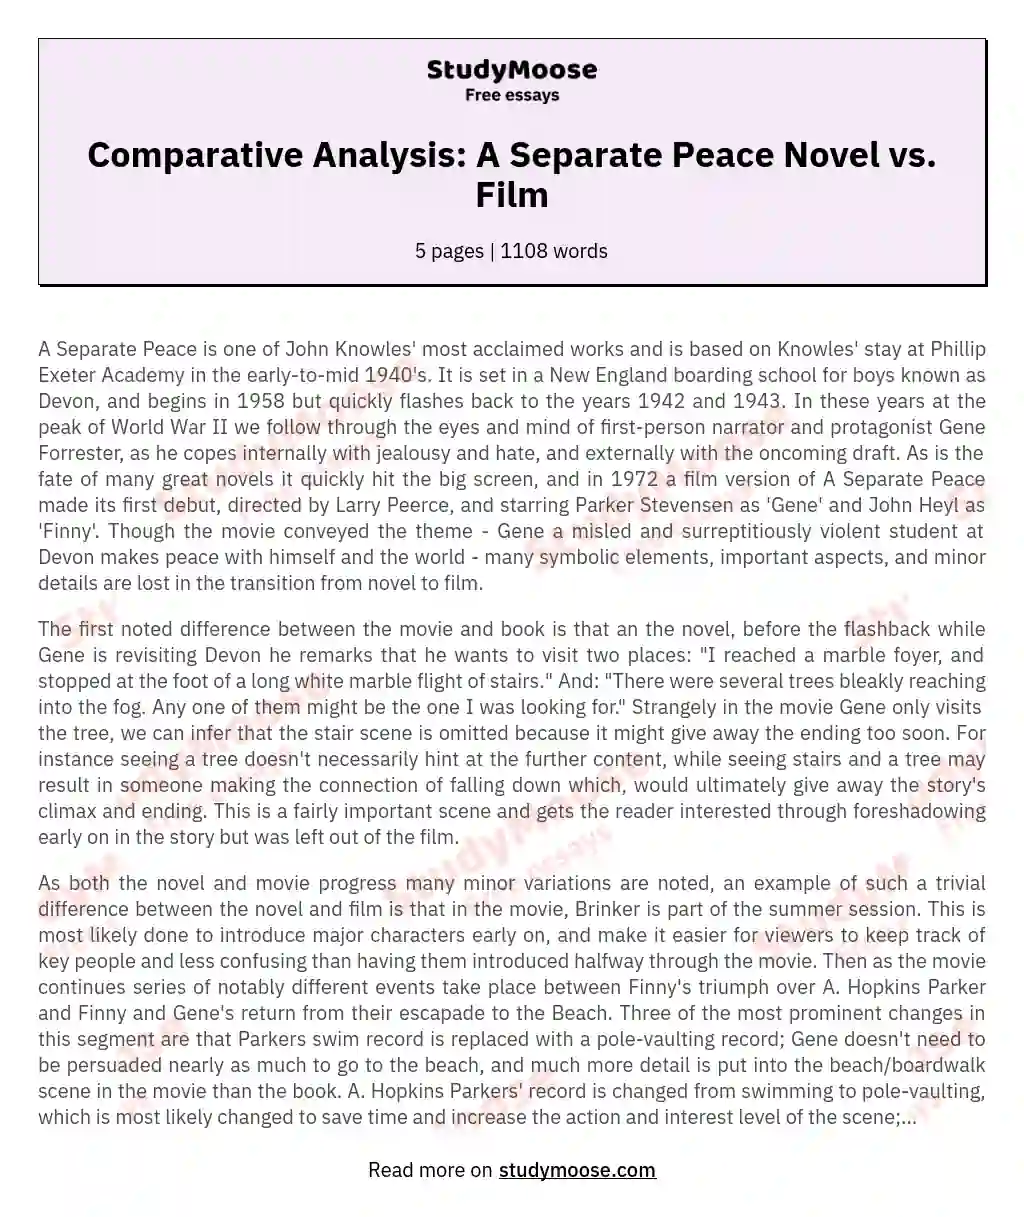 Comparative Analysis: A Separate Peace Novel vs. Film essay